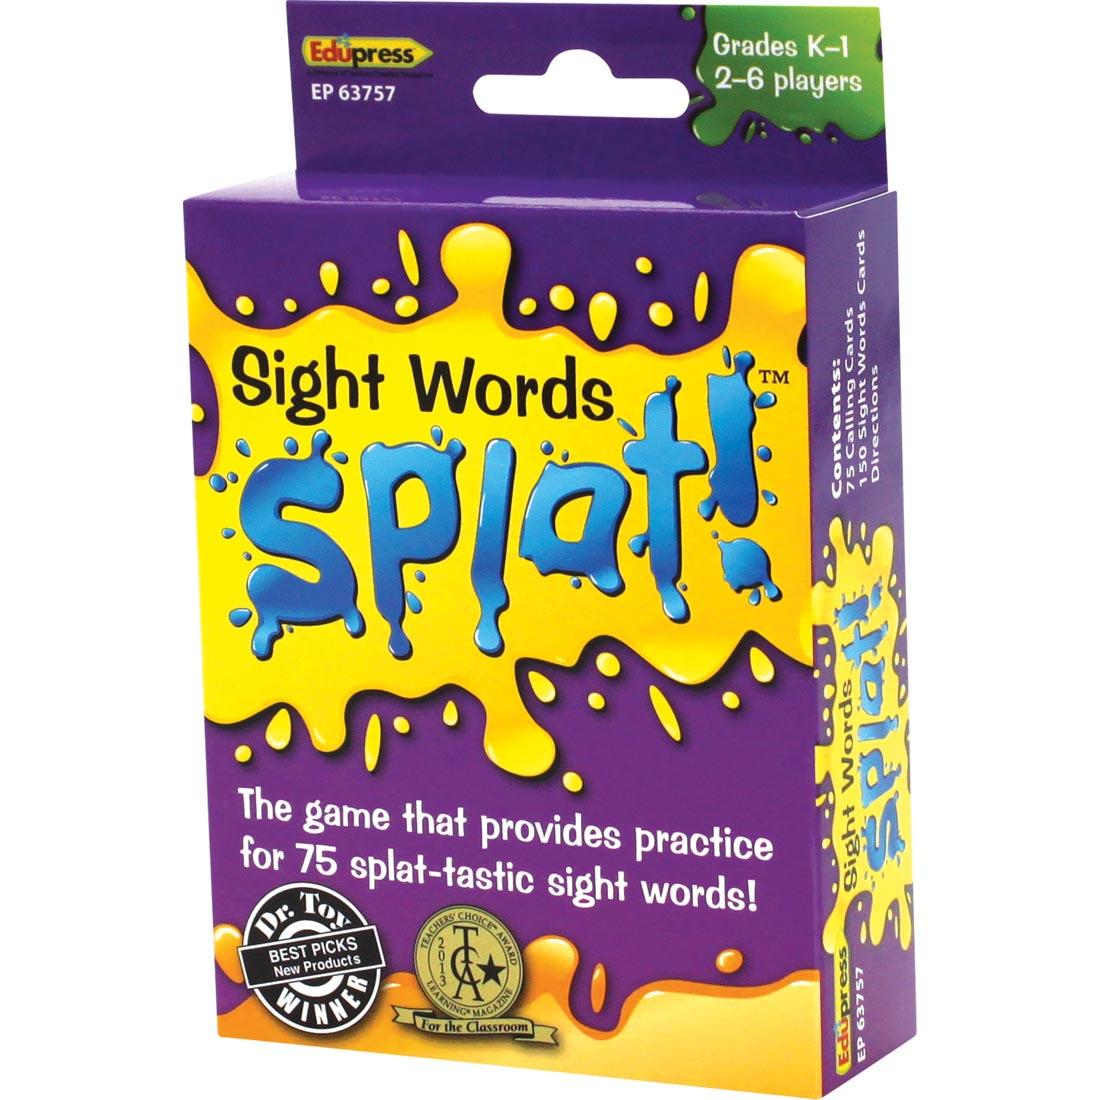 Box for Sight Words Grades K-1 Splat Game